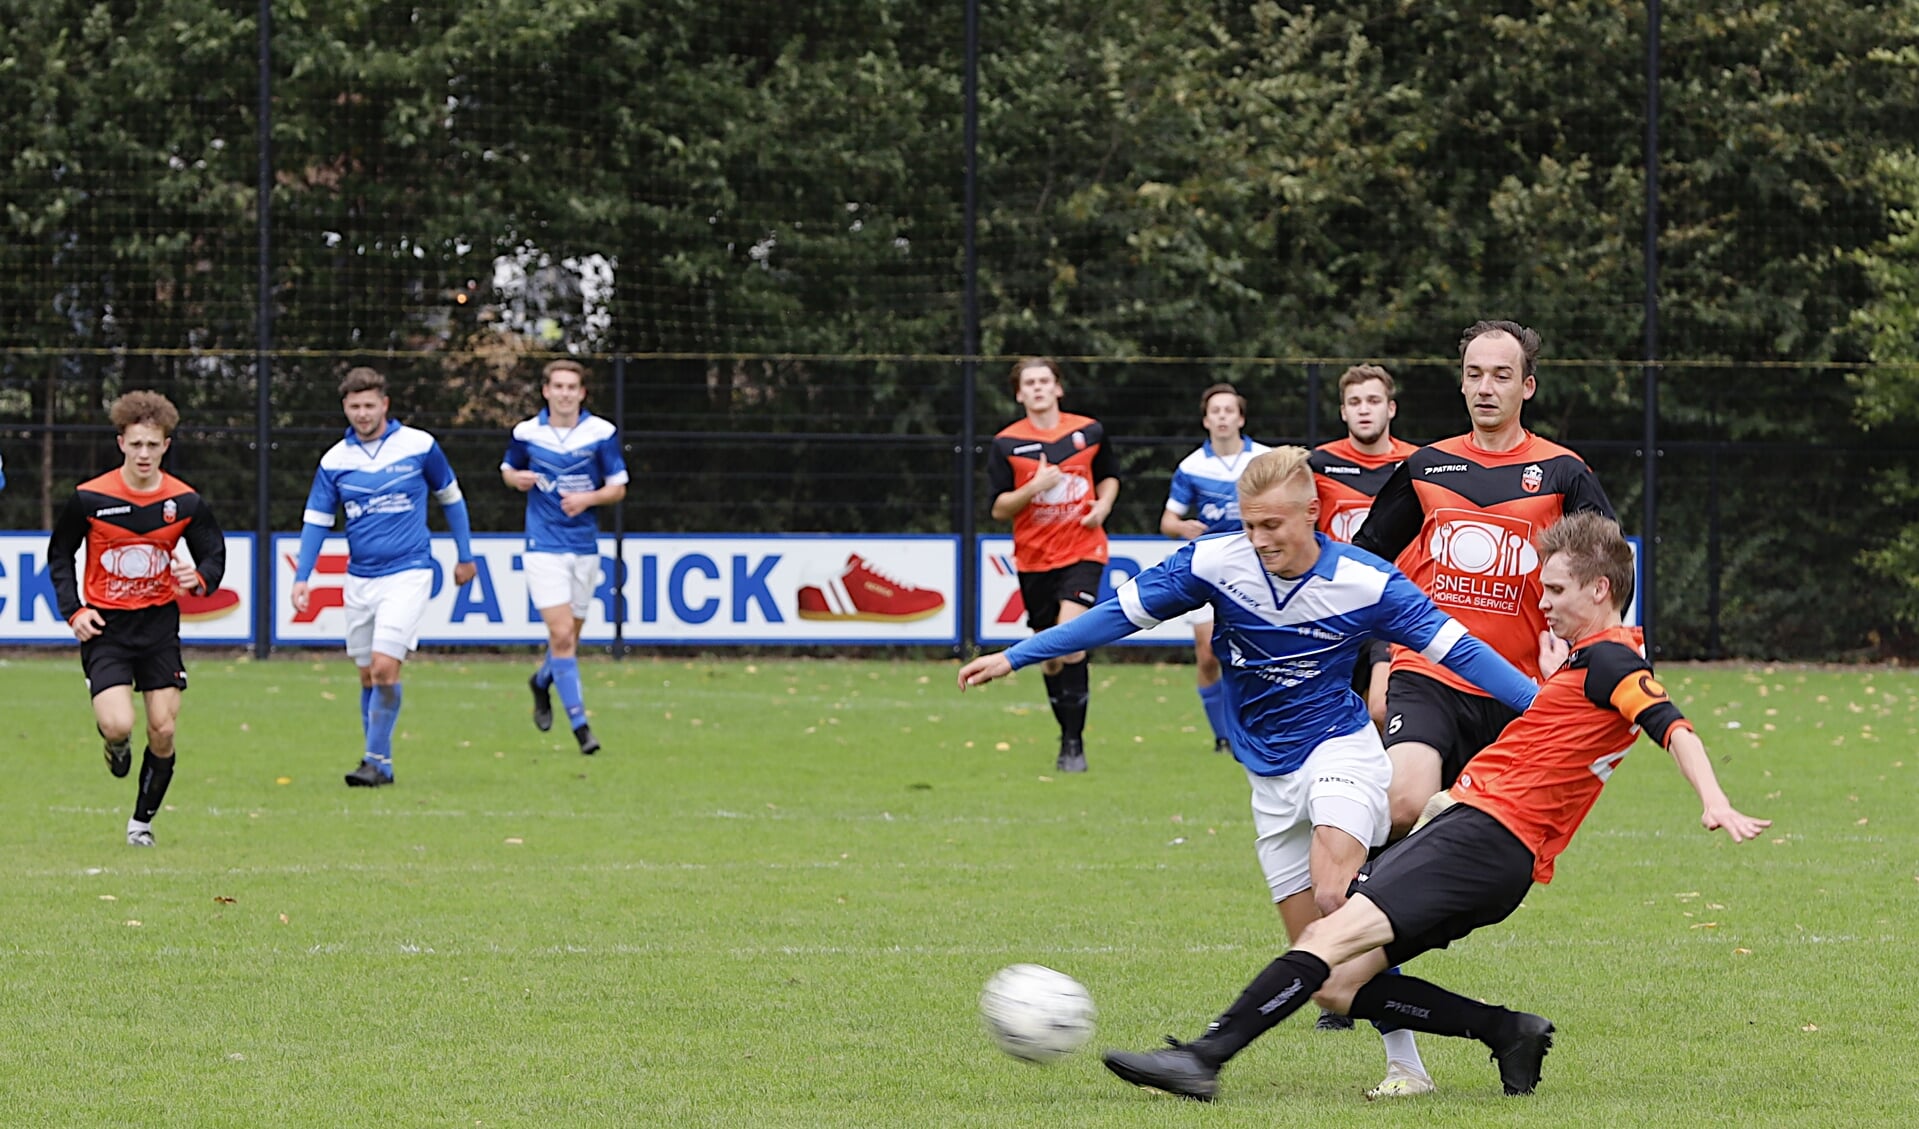 SV United-aanvaller Mike Linders in duel met een speler van Vitesse’08.